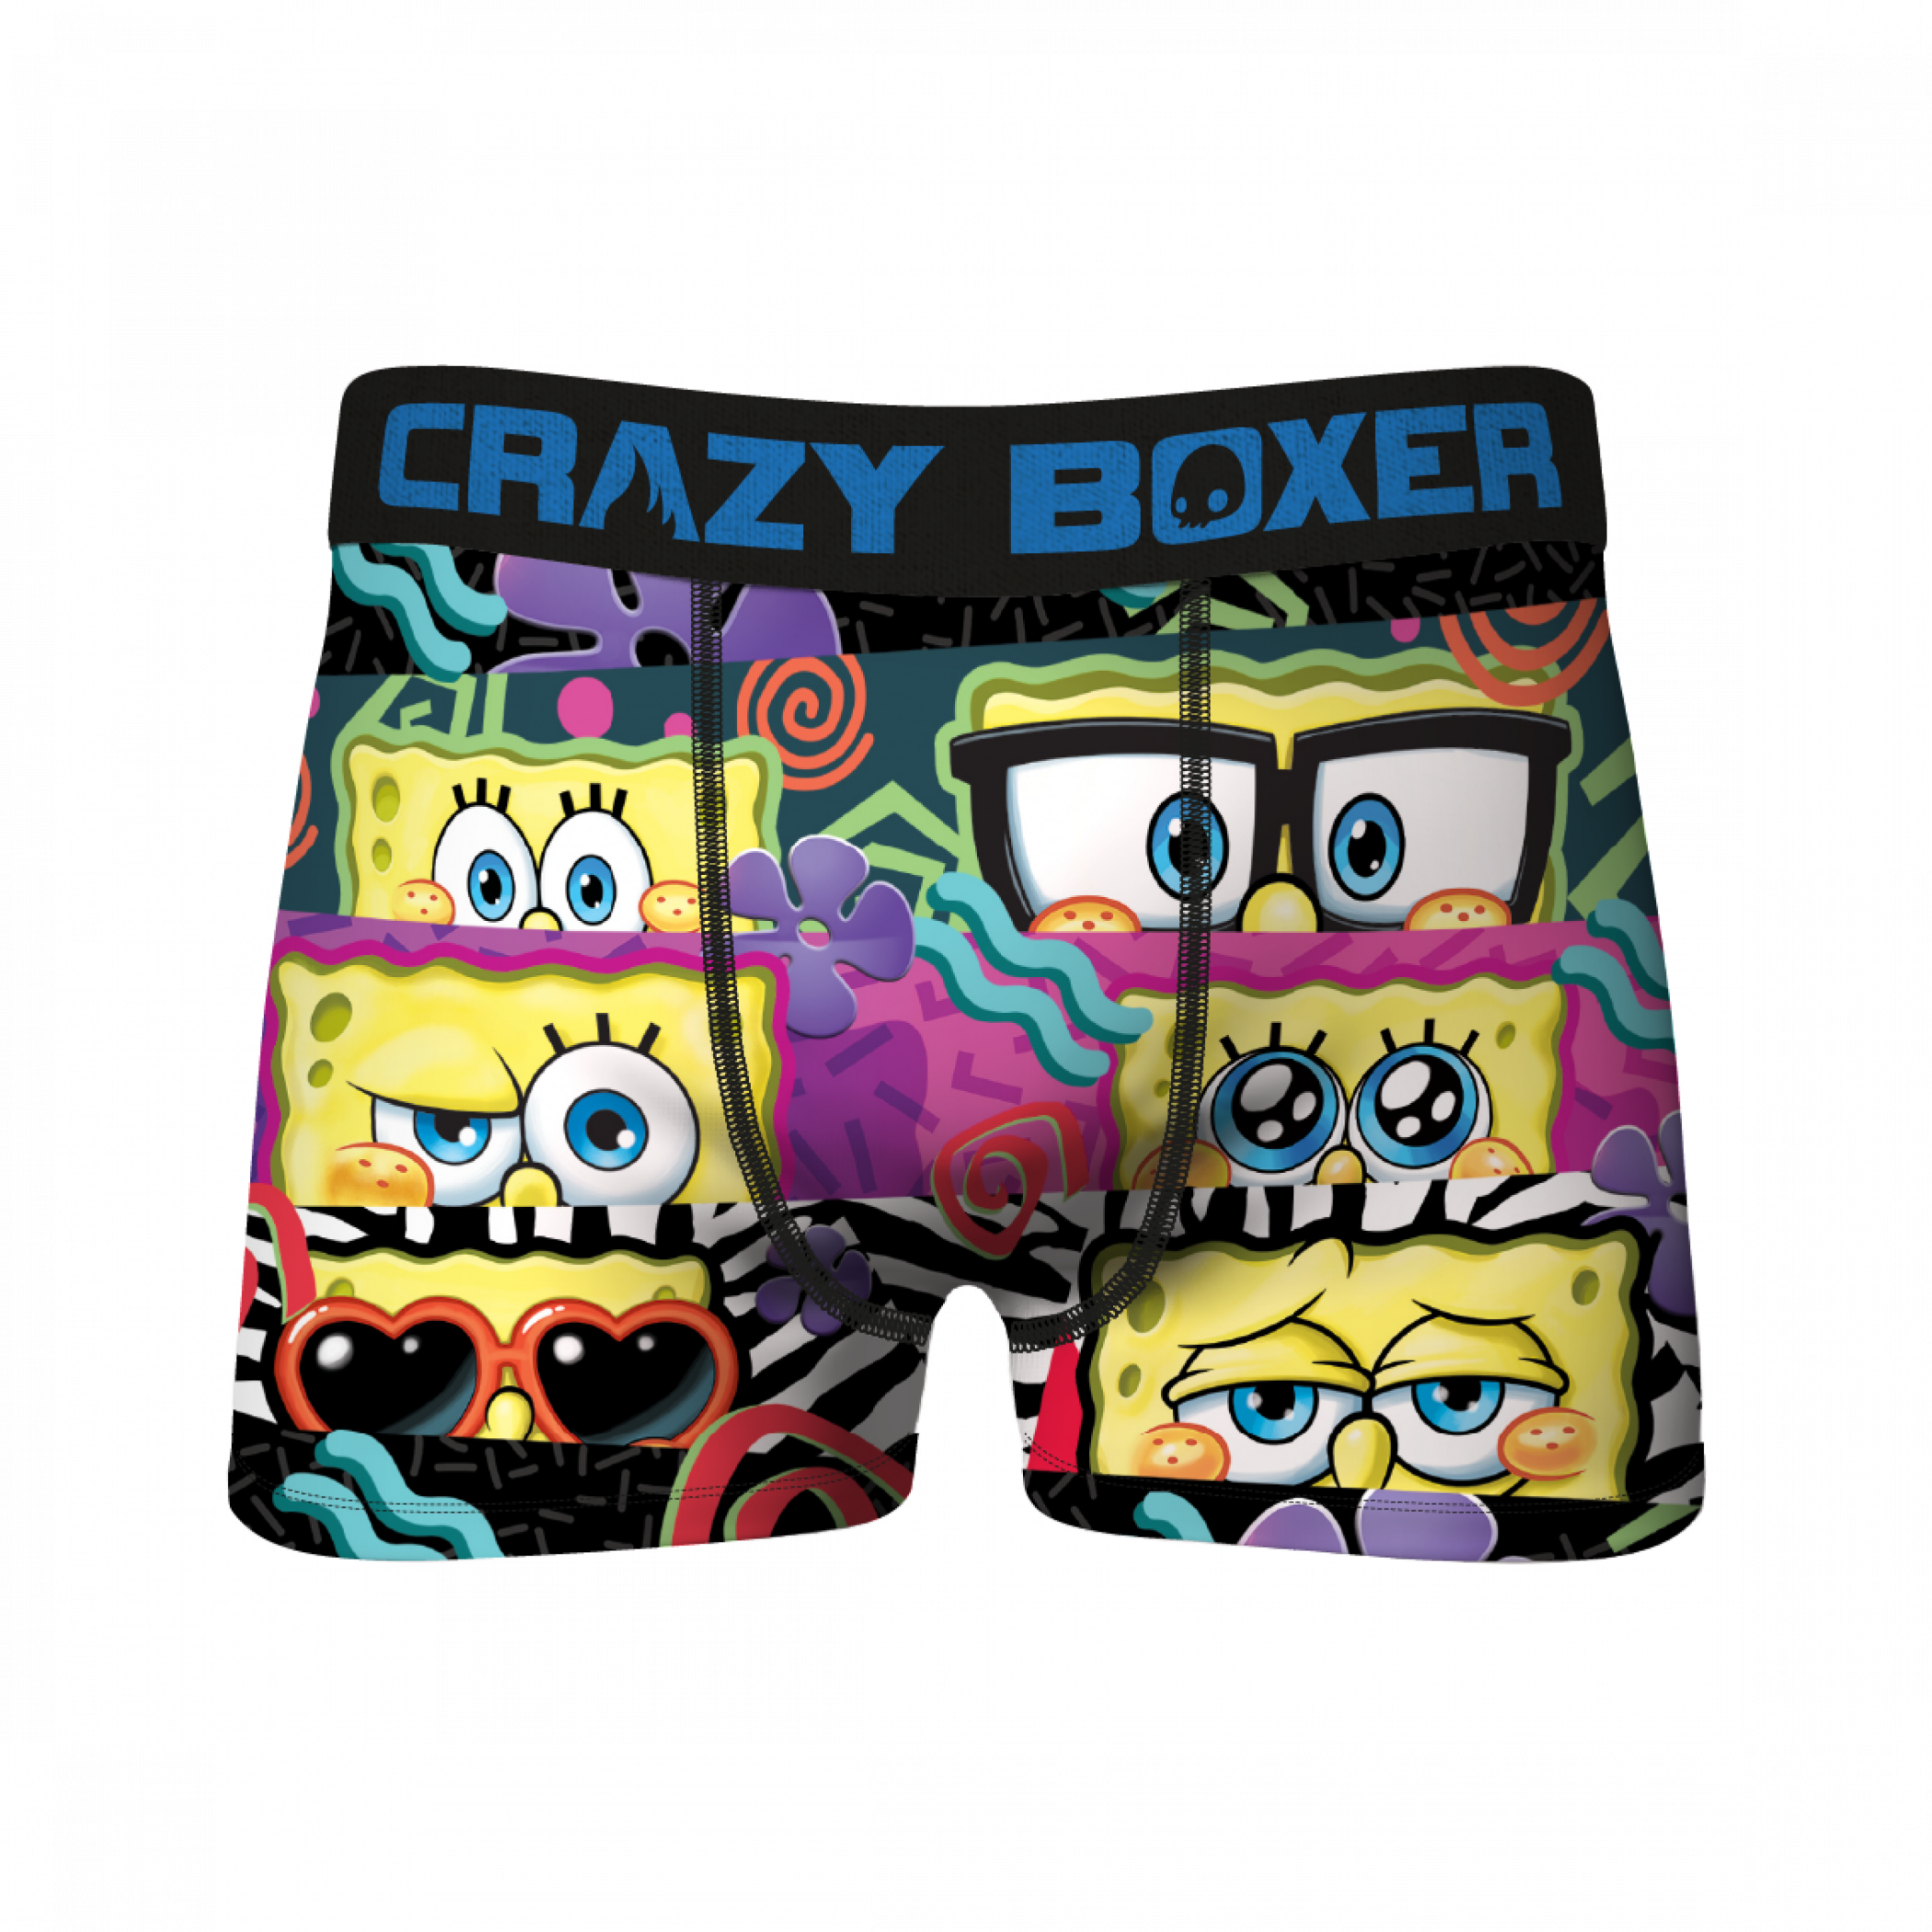 Spongebob Squarepants Character All Over 2 Pack Boxer Briefs